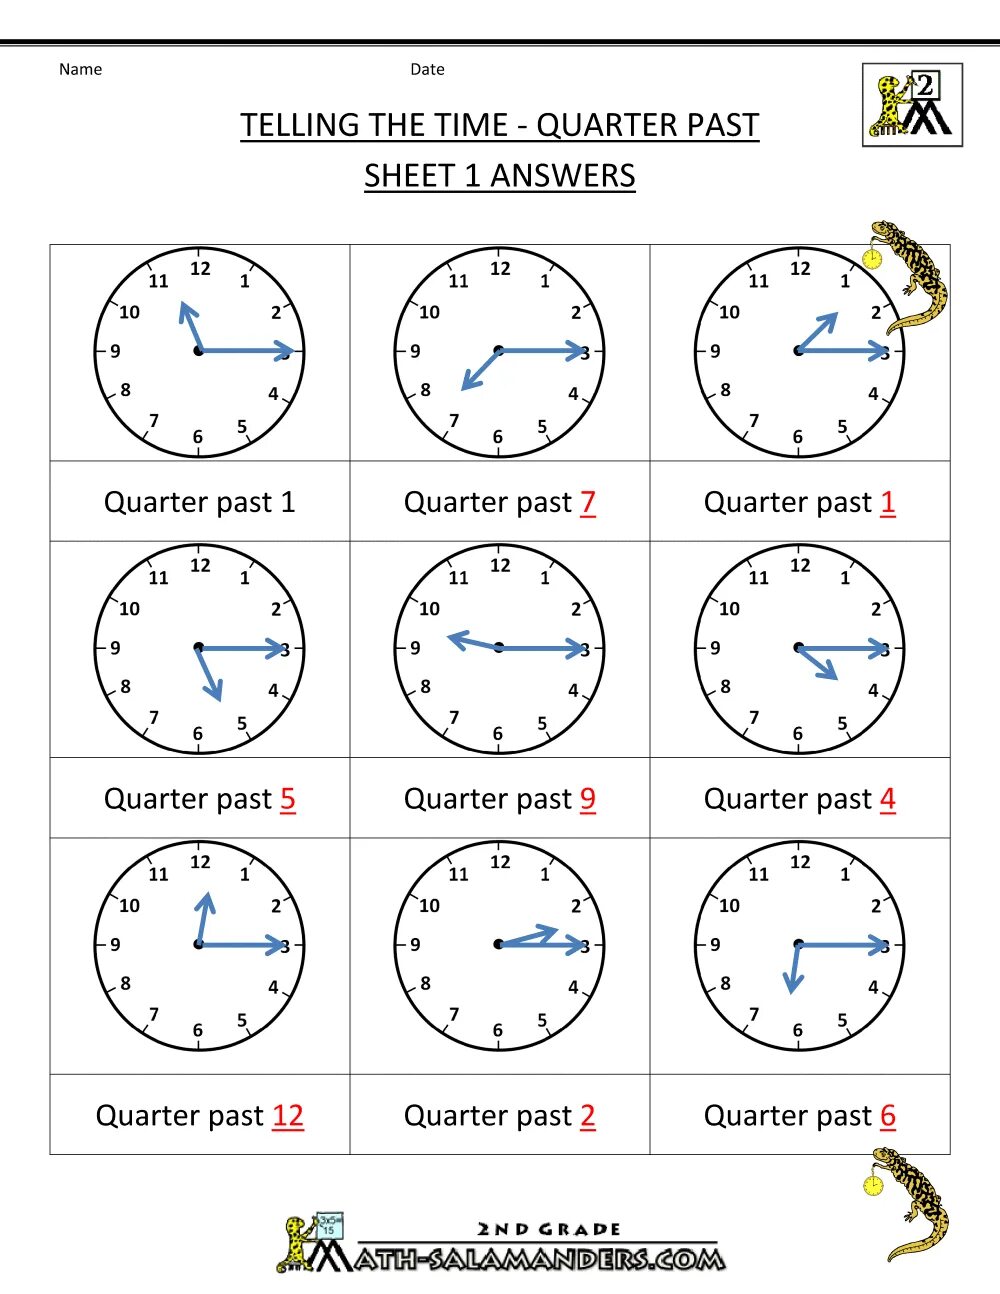 Telling the time worksheet. Telling the time half Quarter. Задания Quarter past. Telling the time задания. Telling the time упражнения.